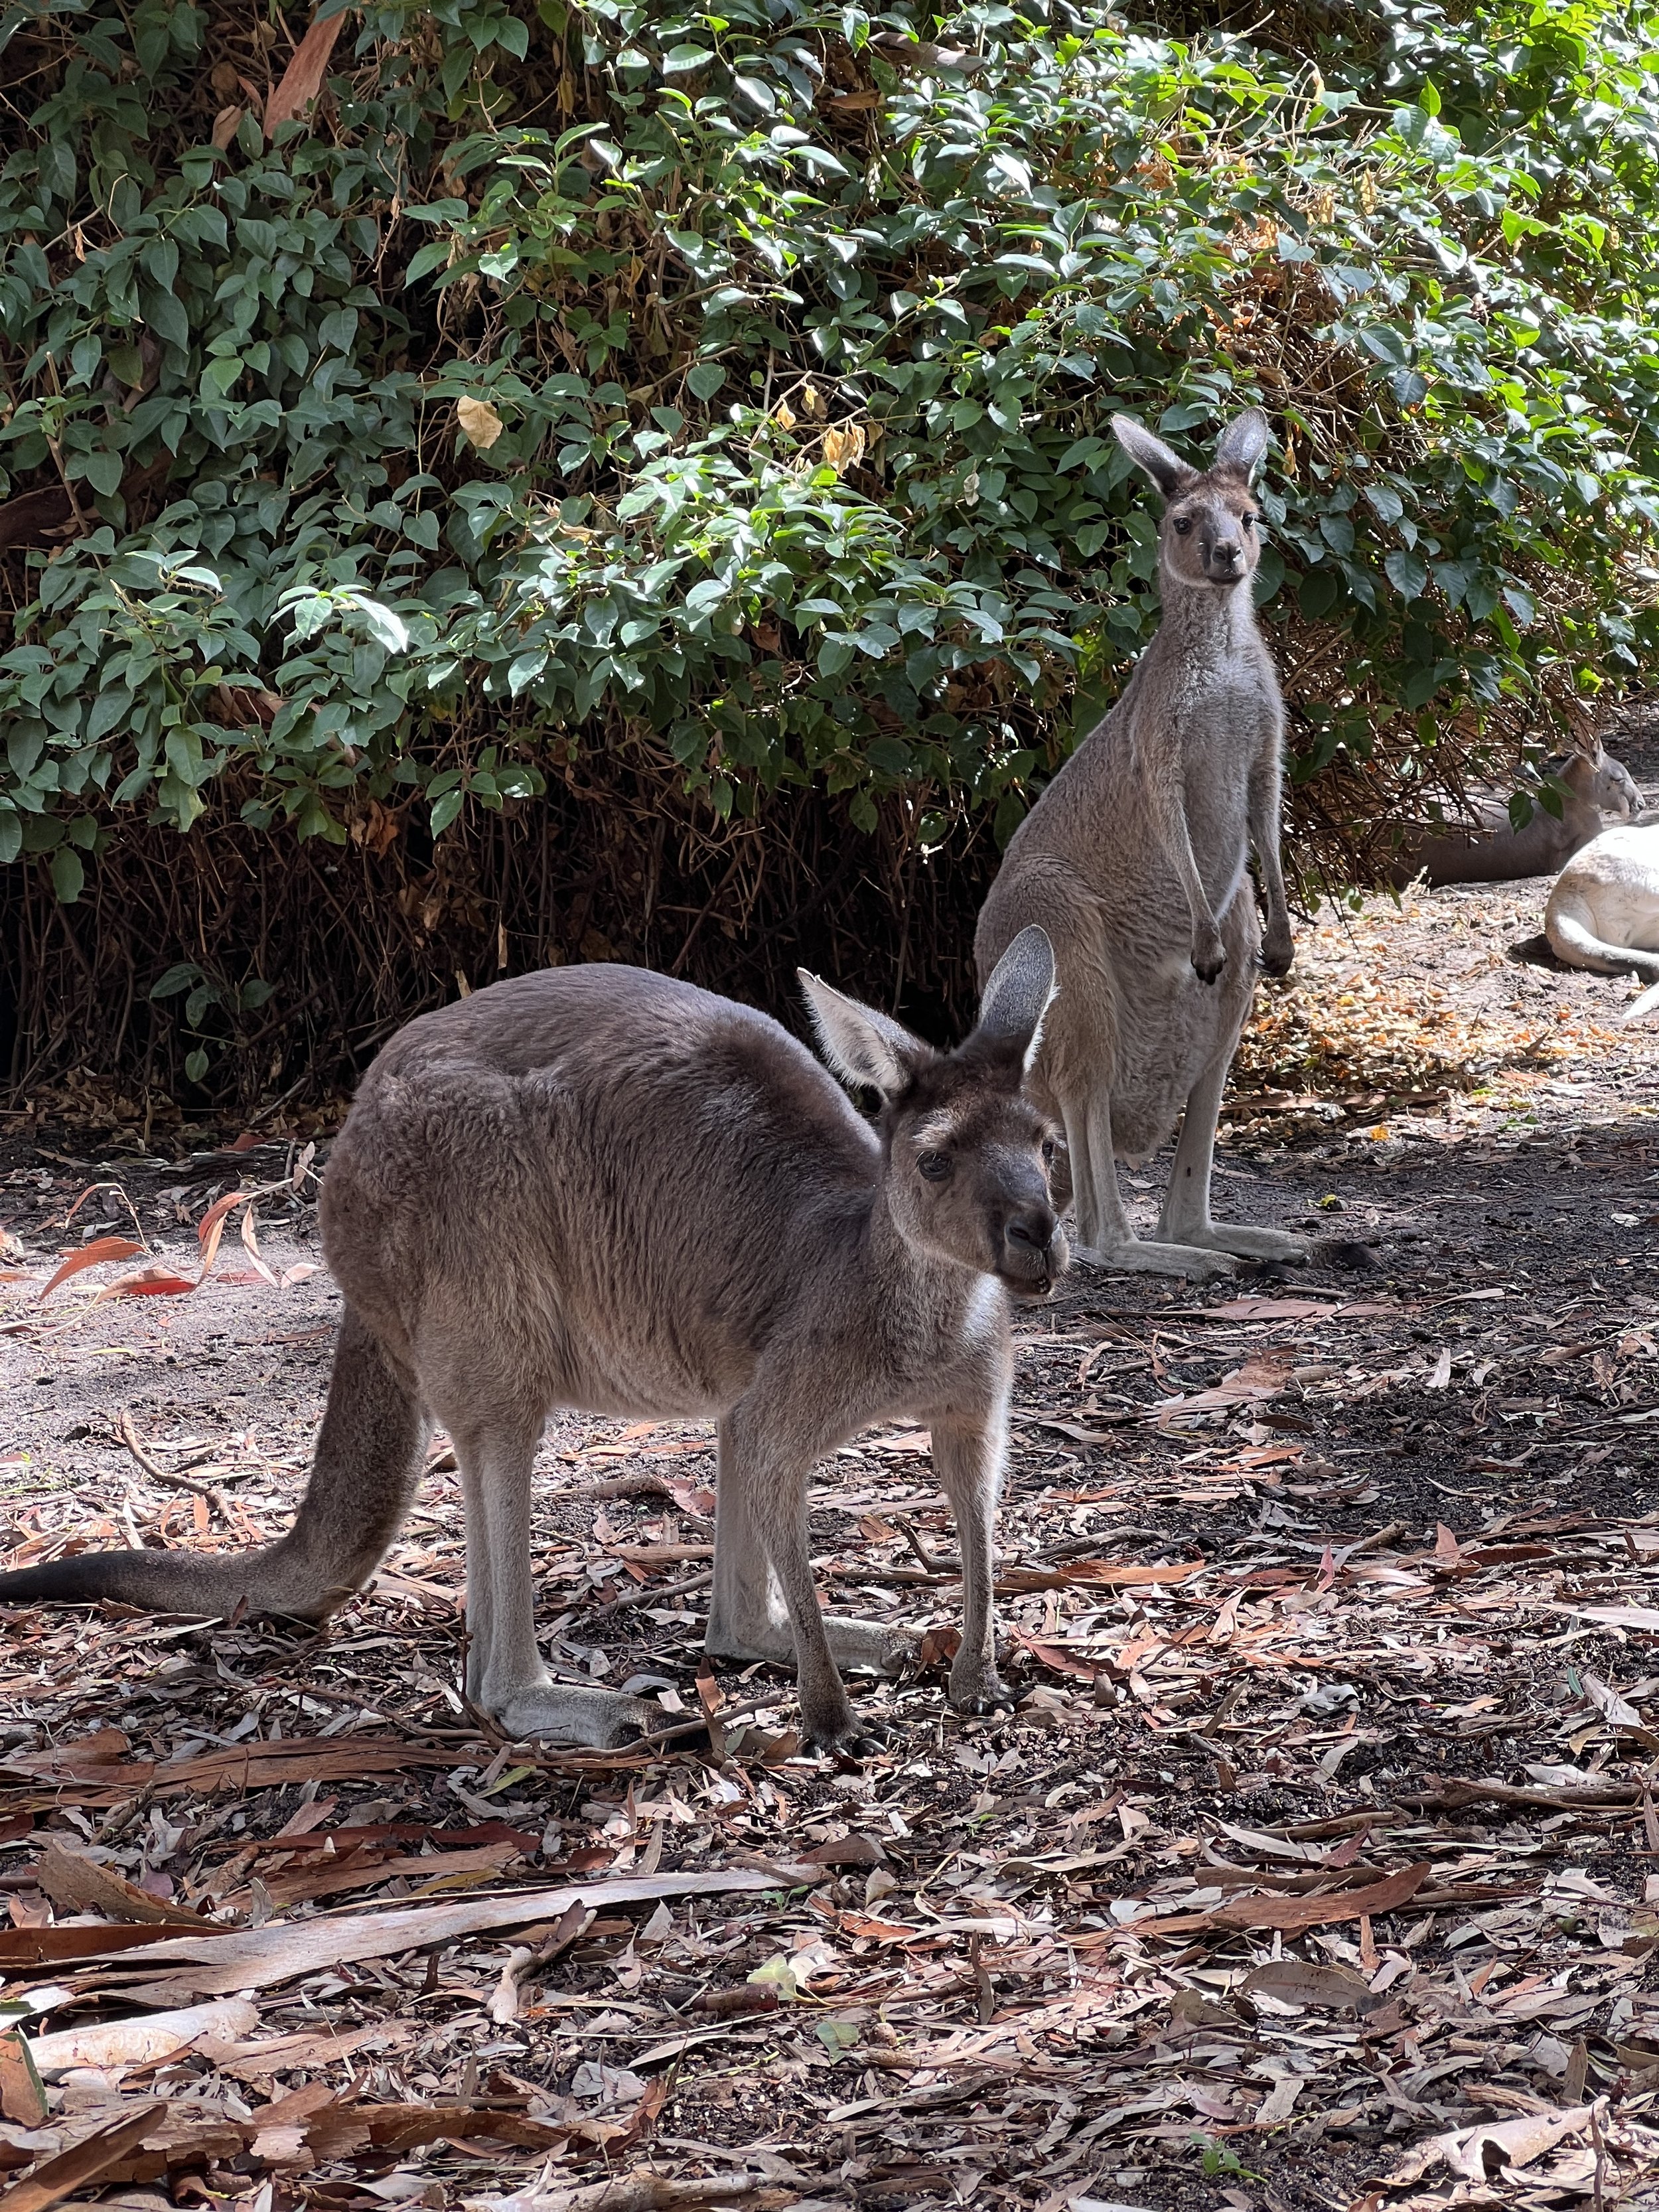 Gray kangaroos in Perth Zoo